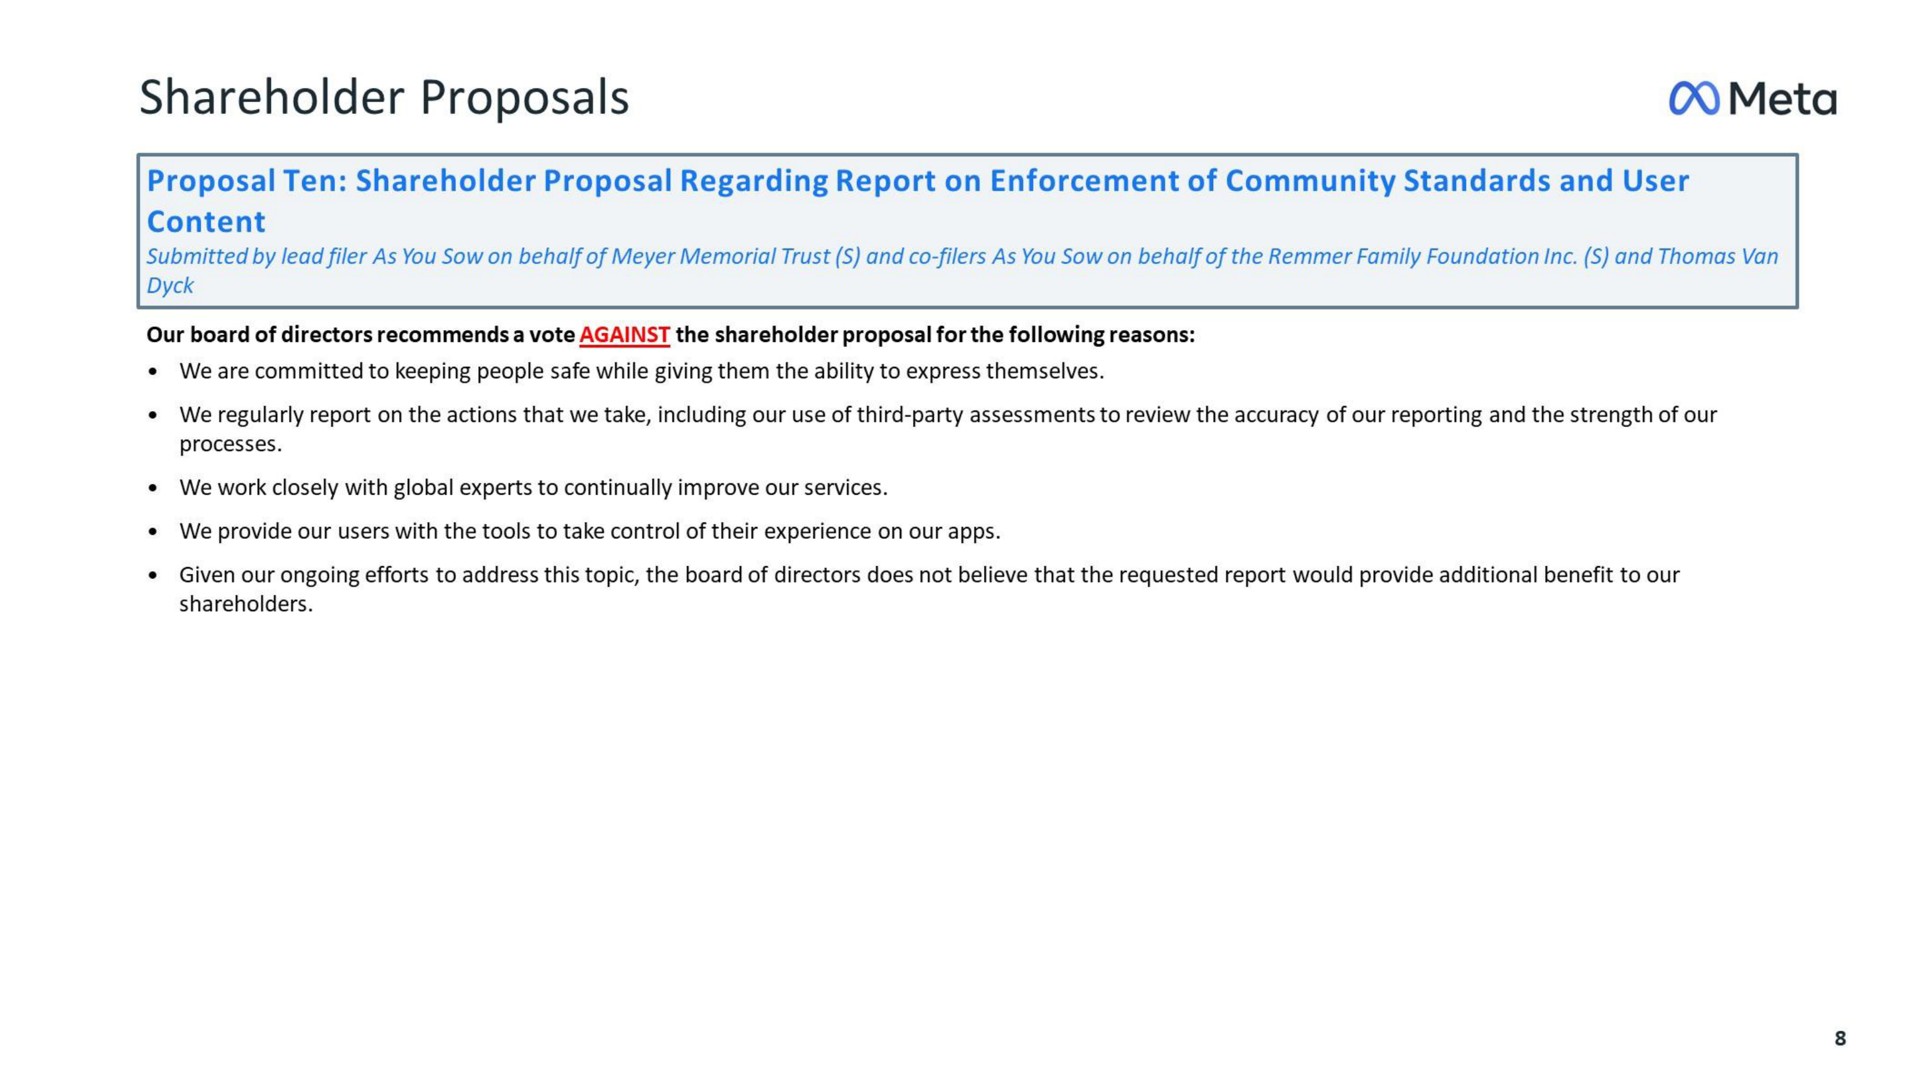 shareholder proposals meta proposal ten shareholder proposal regarding report on enforcement of community standards and user content | Meta